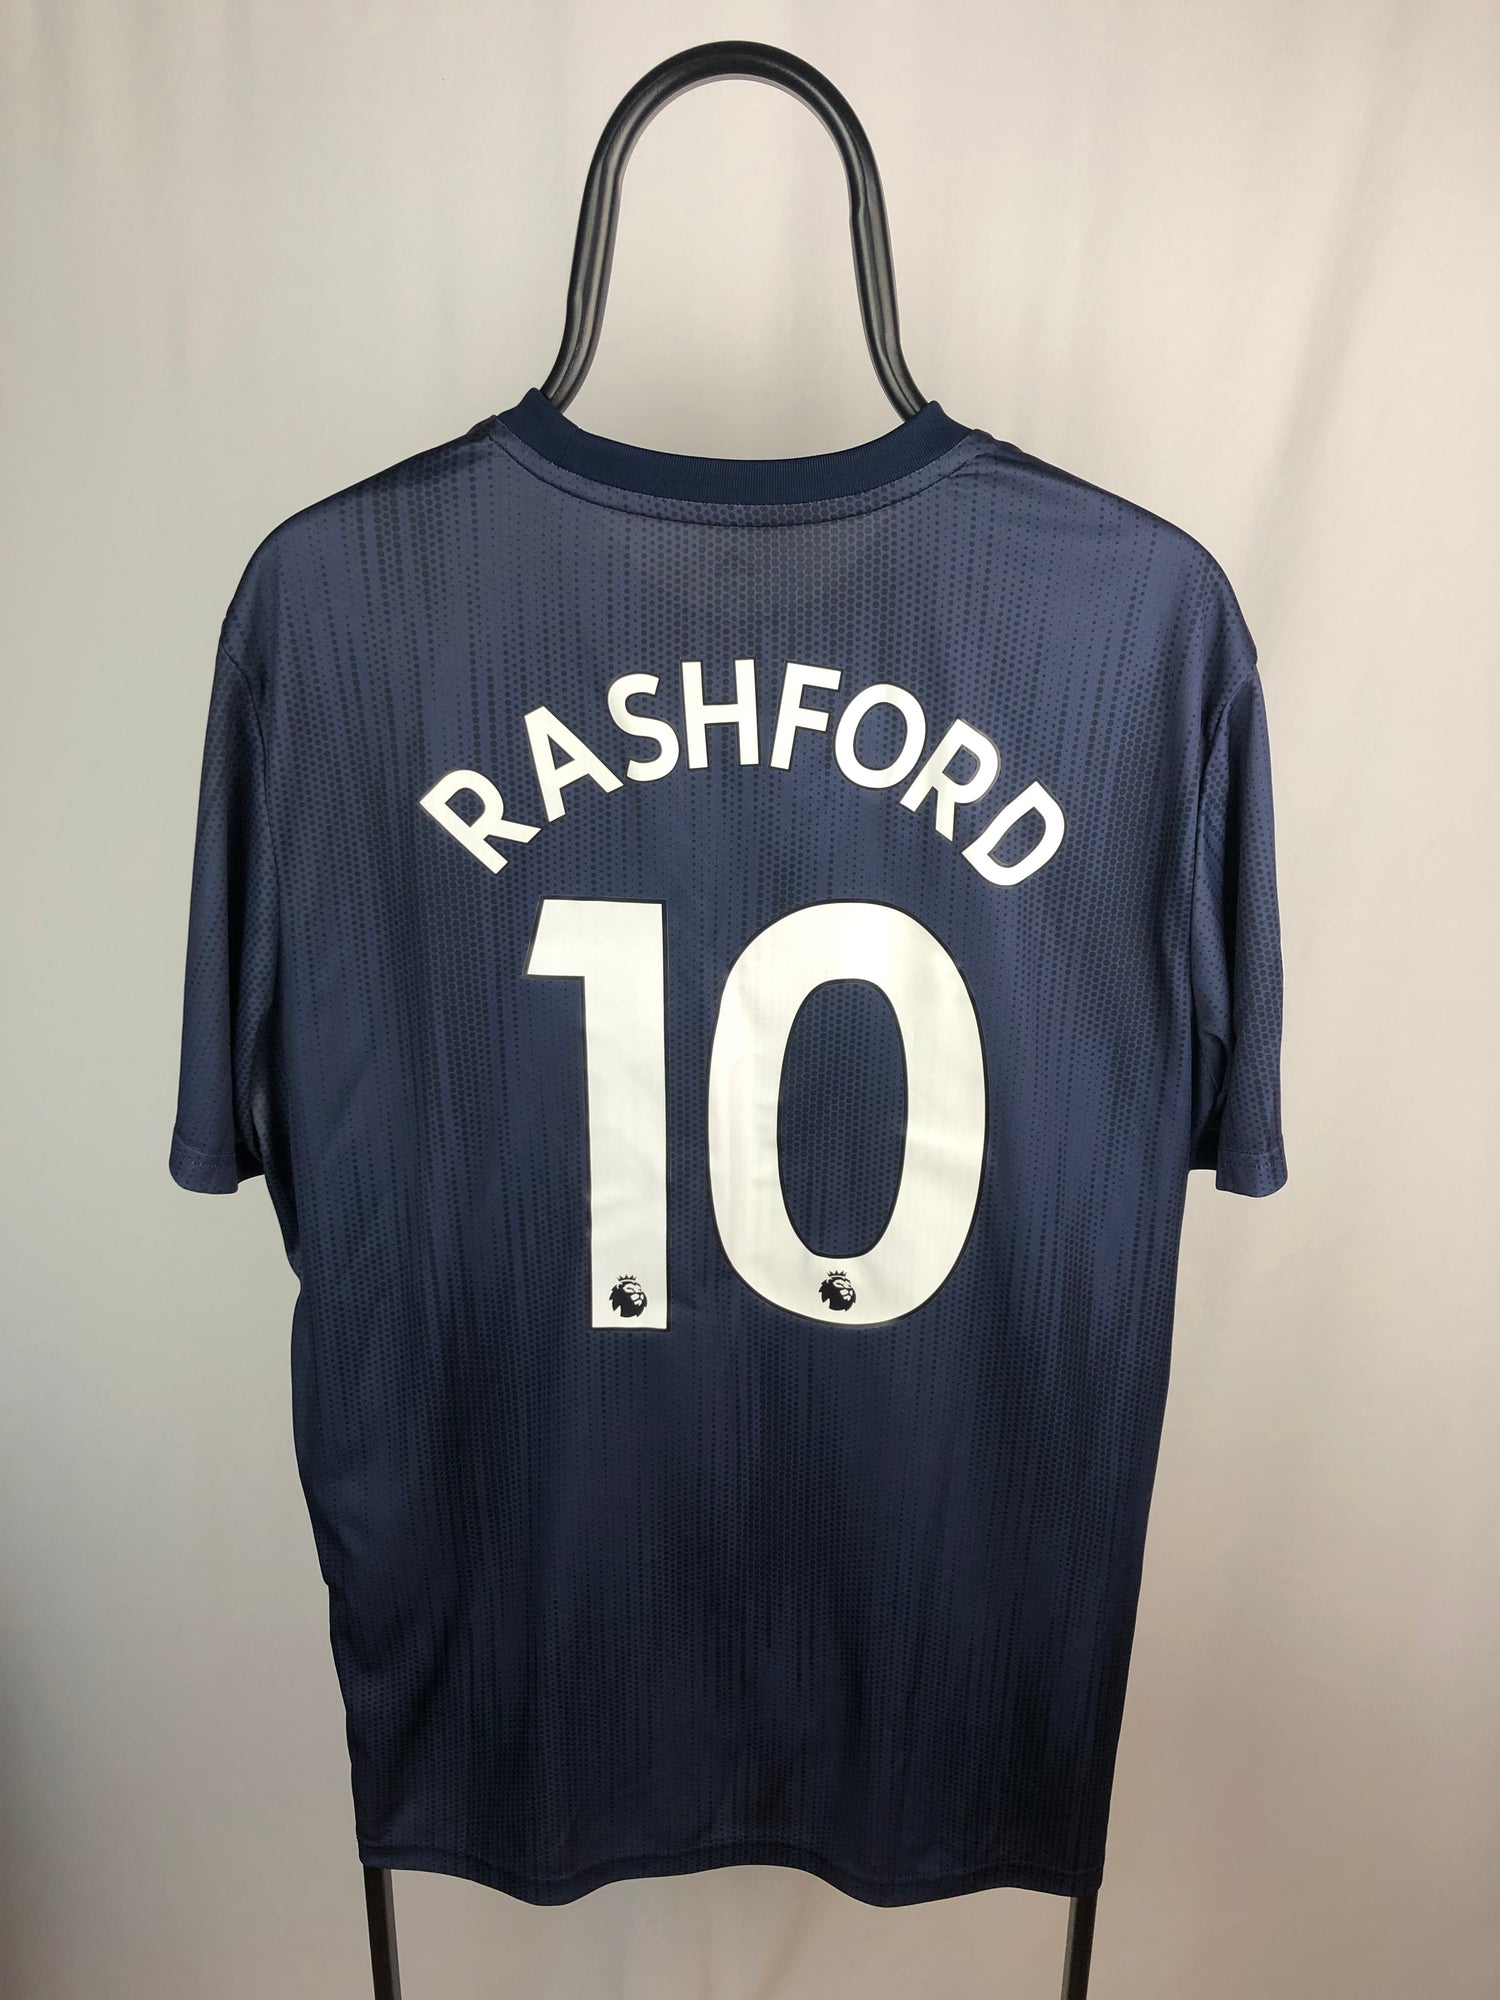 Marcus Rashford Manchester United 18/19 3 Shirt - XL